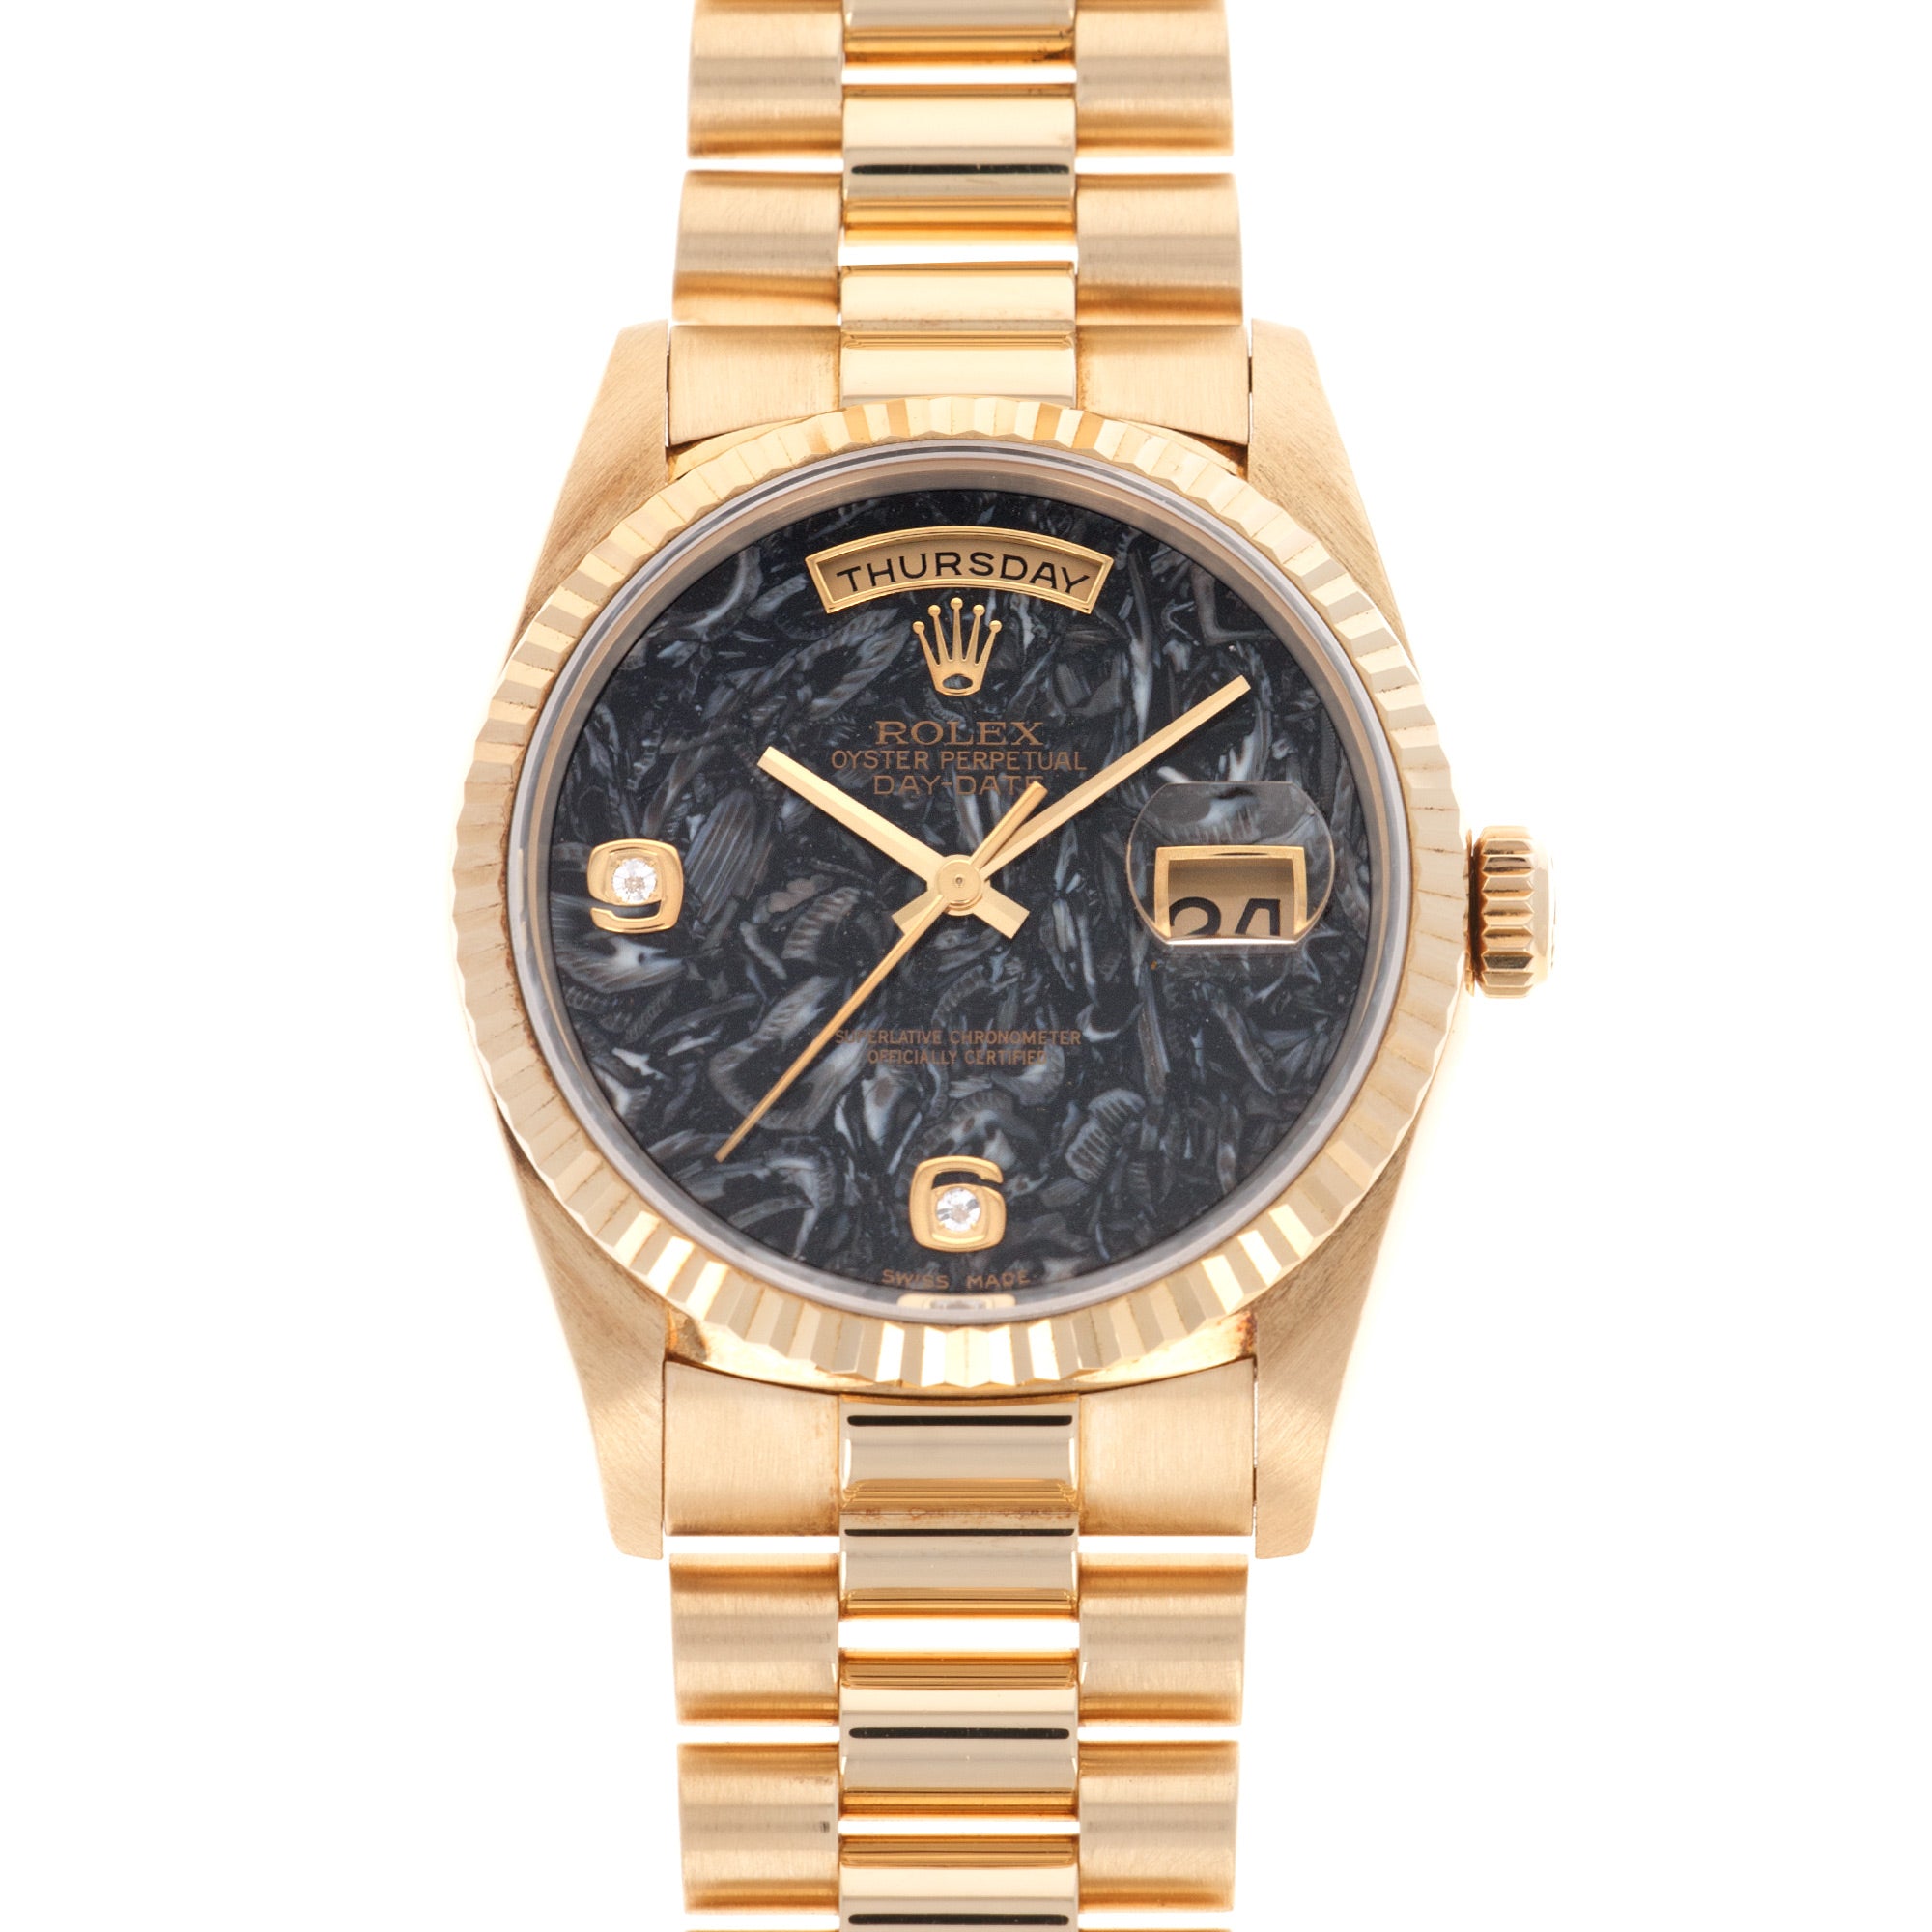 Rolex - Rolex Yellow Gold Day-Date Ammonite Stone Dial Watch Ref. 18238 - The Keystone Watches